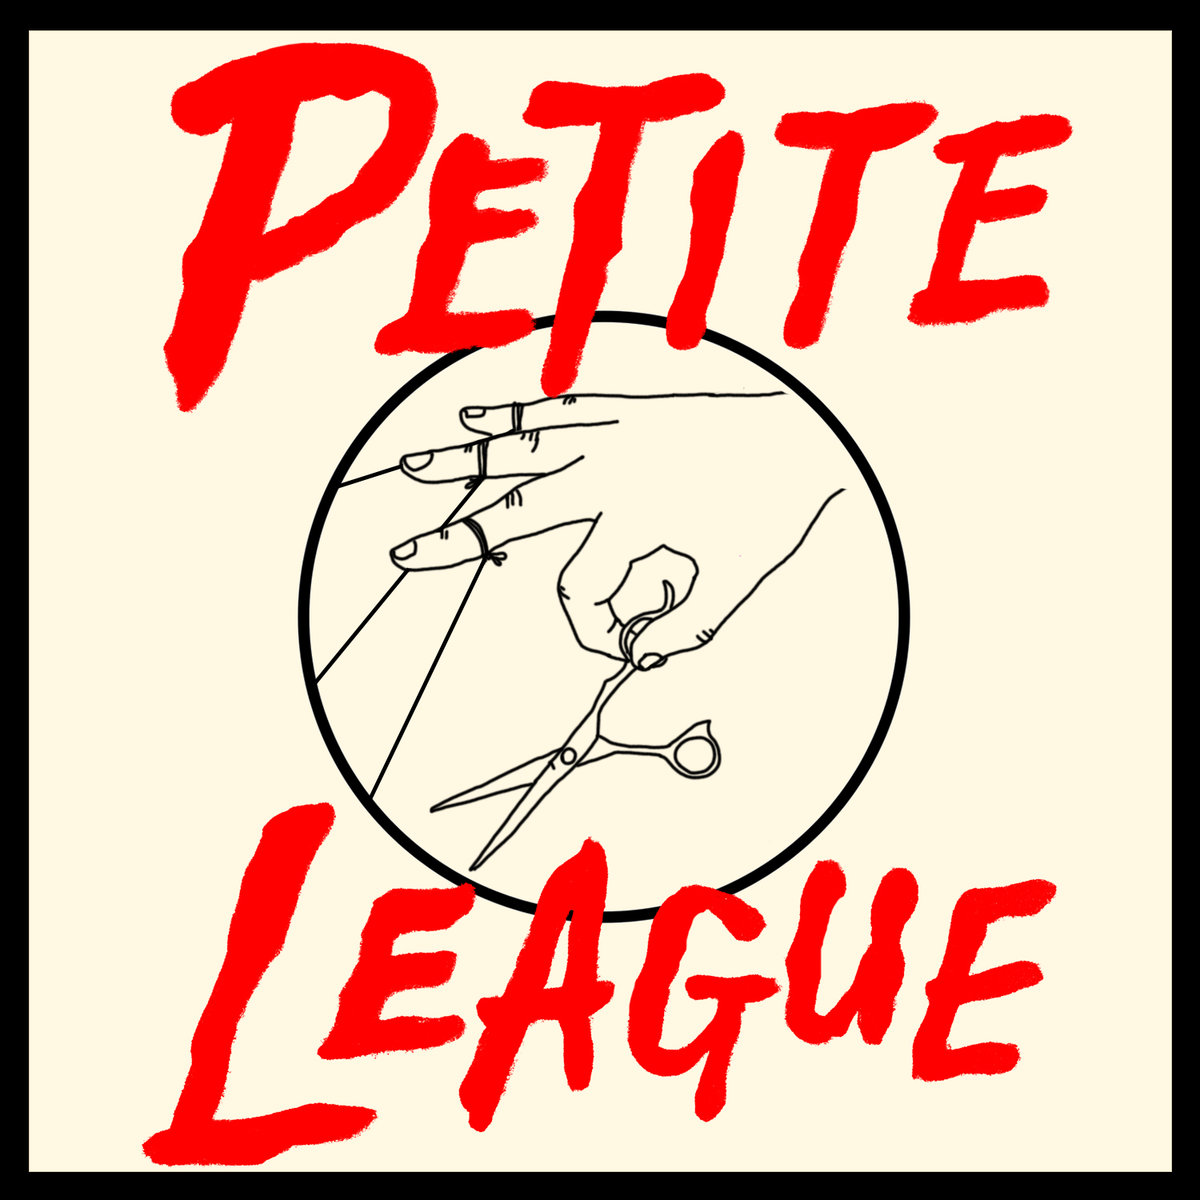 Petite League – “Zookeeper”